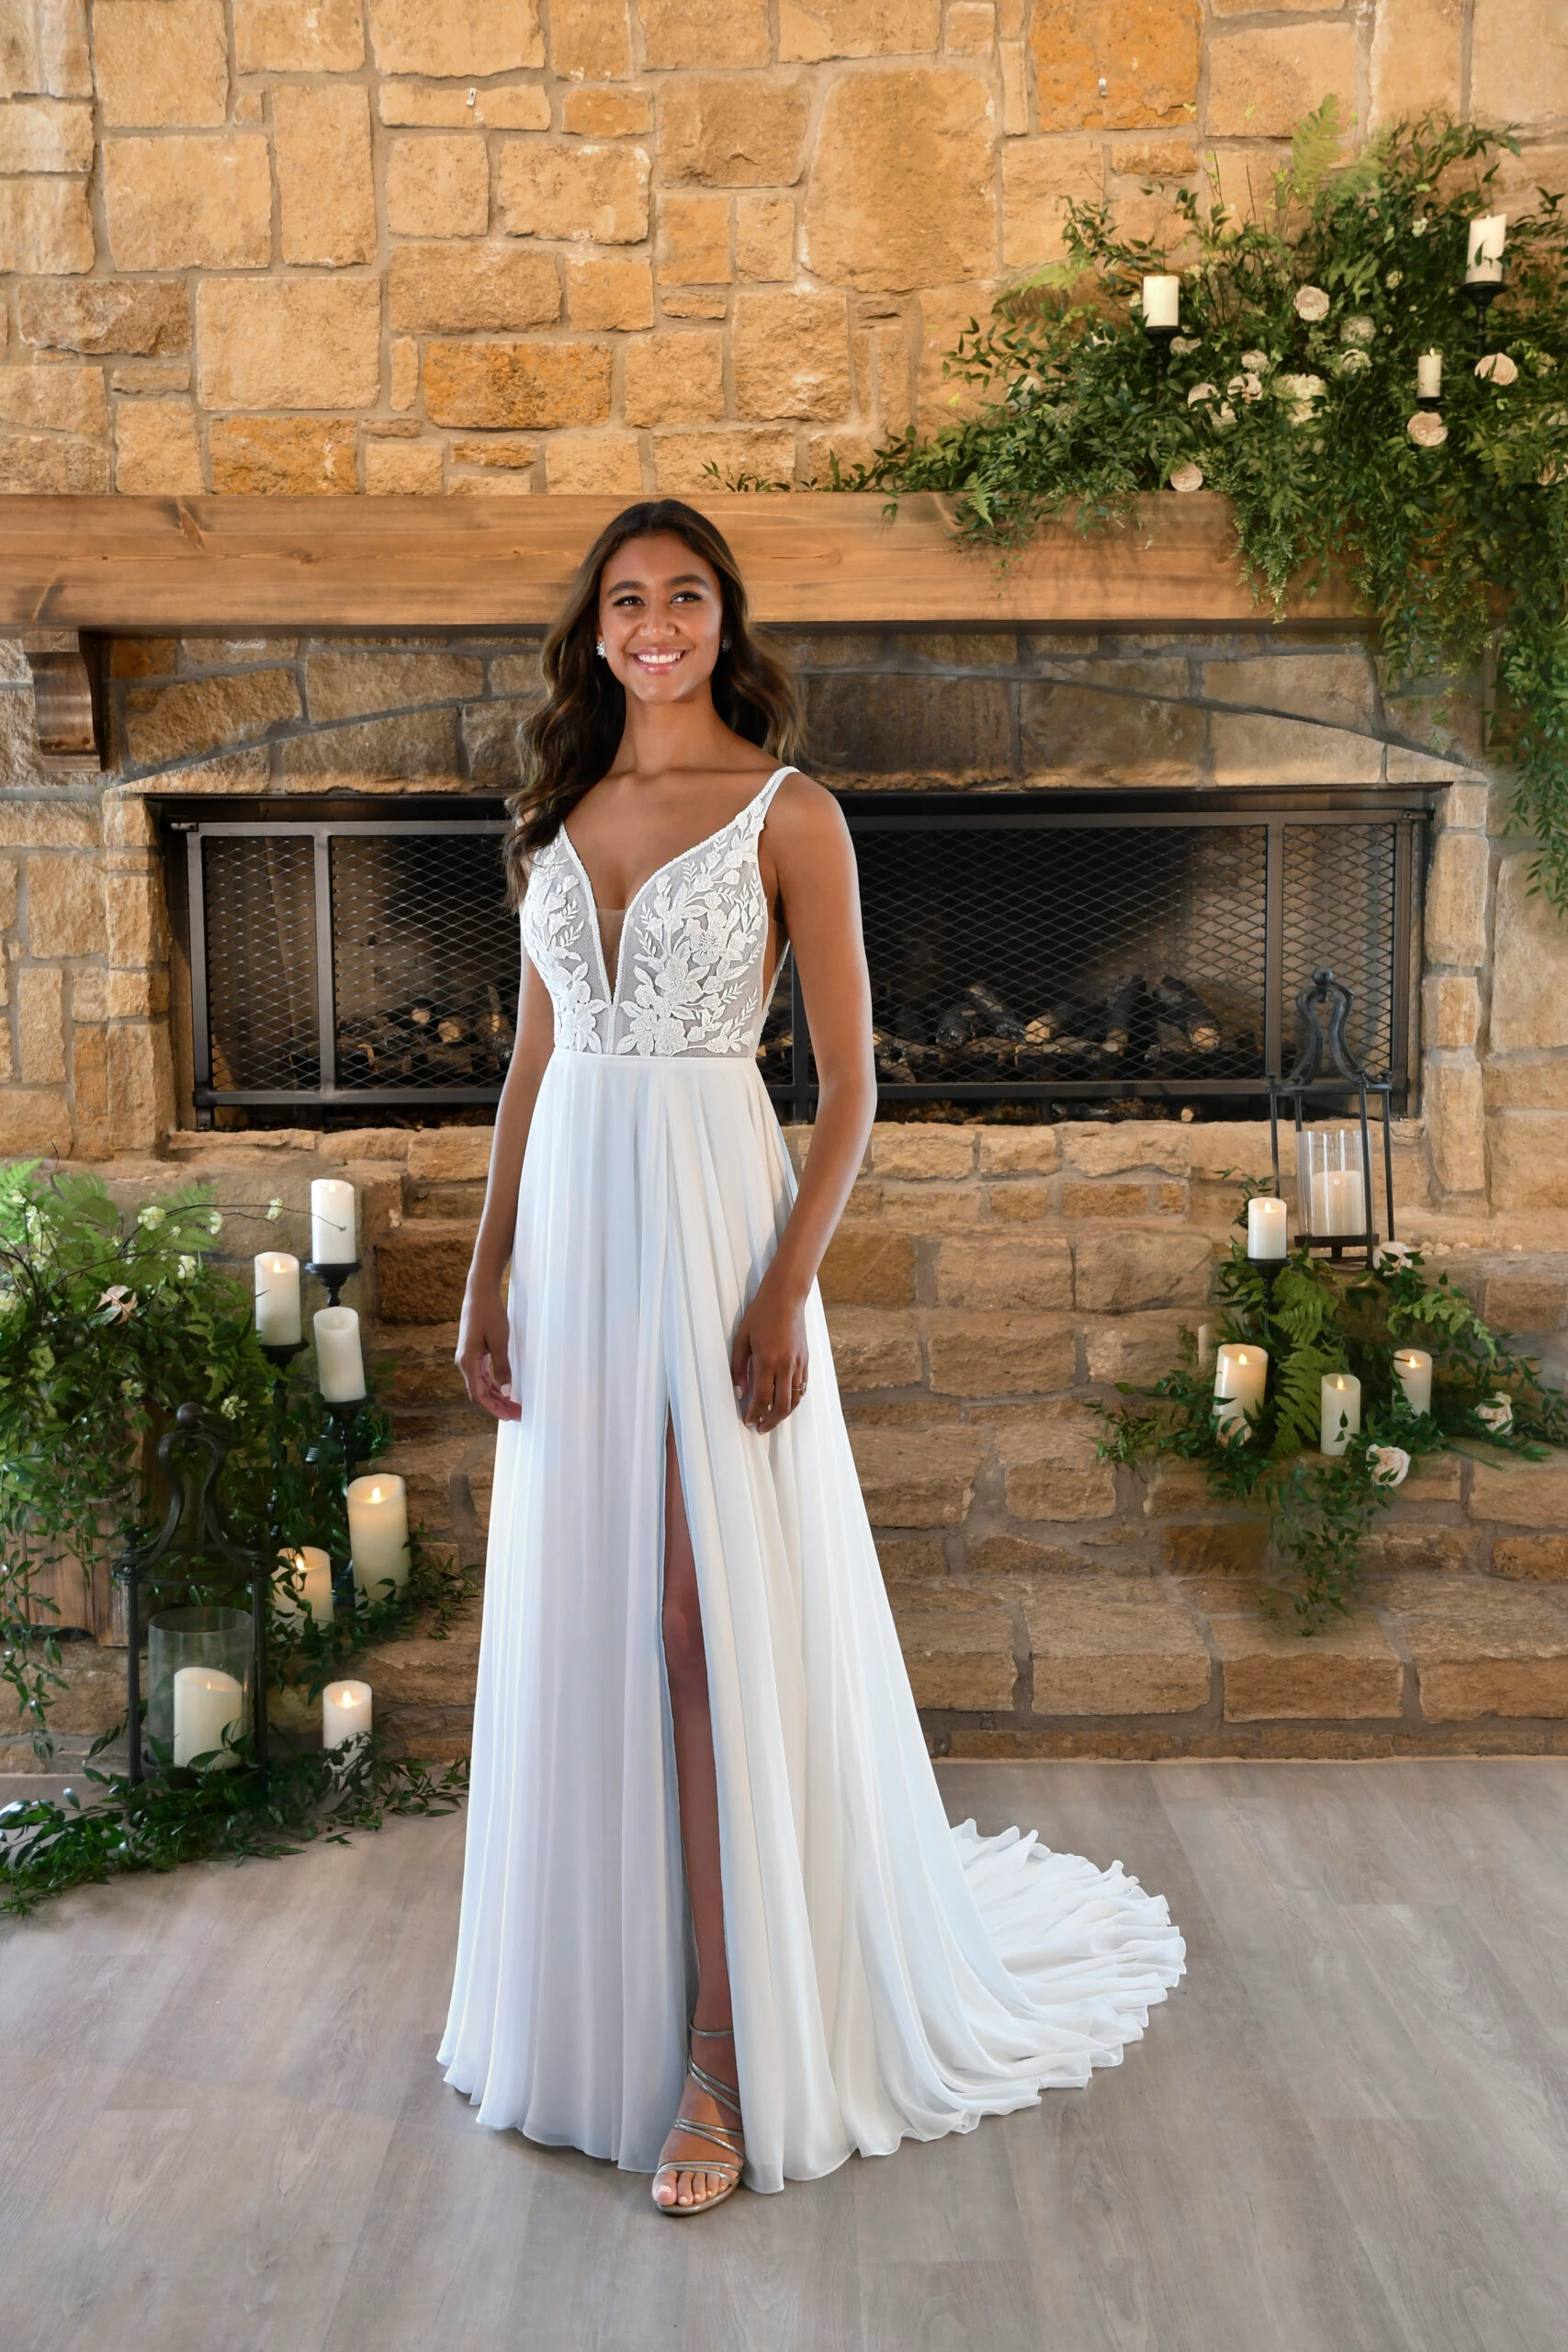 Bride wearing a beach inspired wedding dress